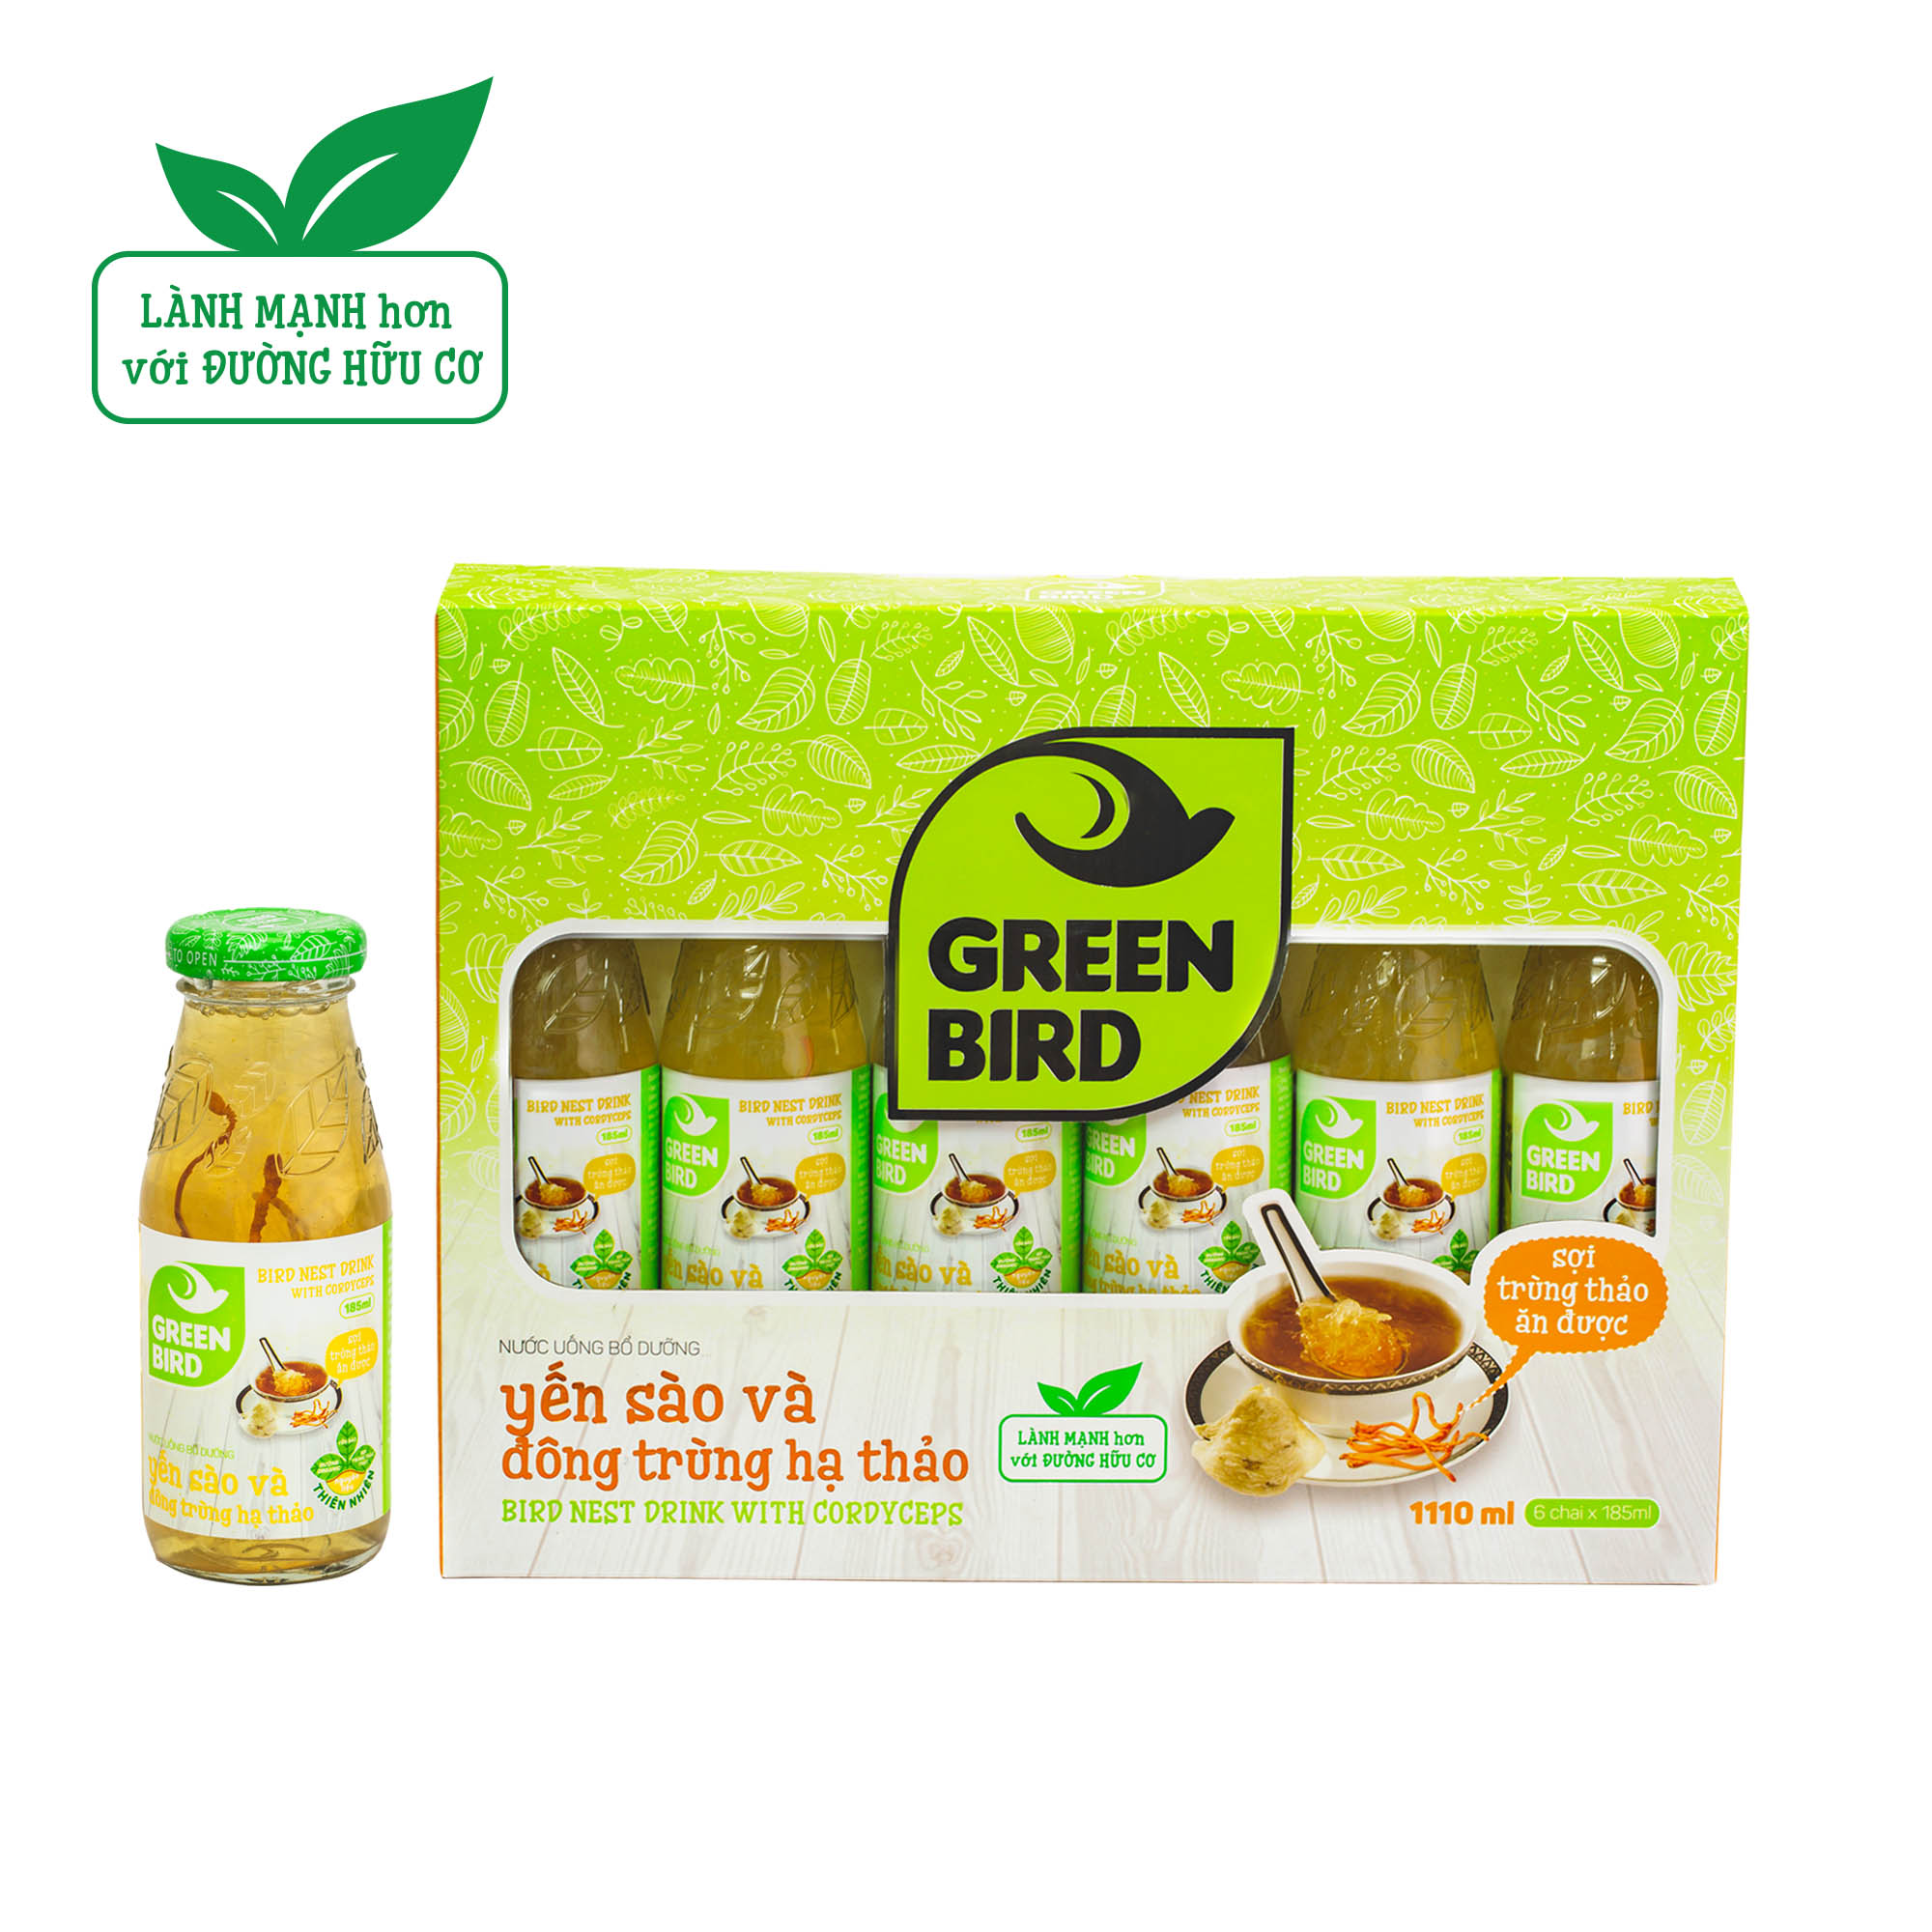  Green Bird - Bird nest soup with cordyceps - Gift set 6 bottles*185ml 